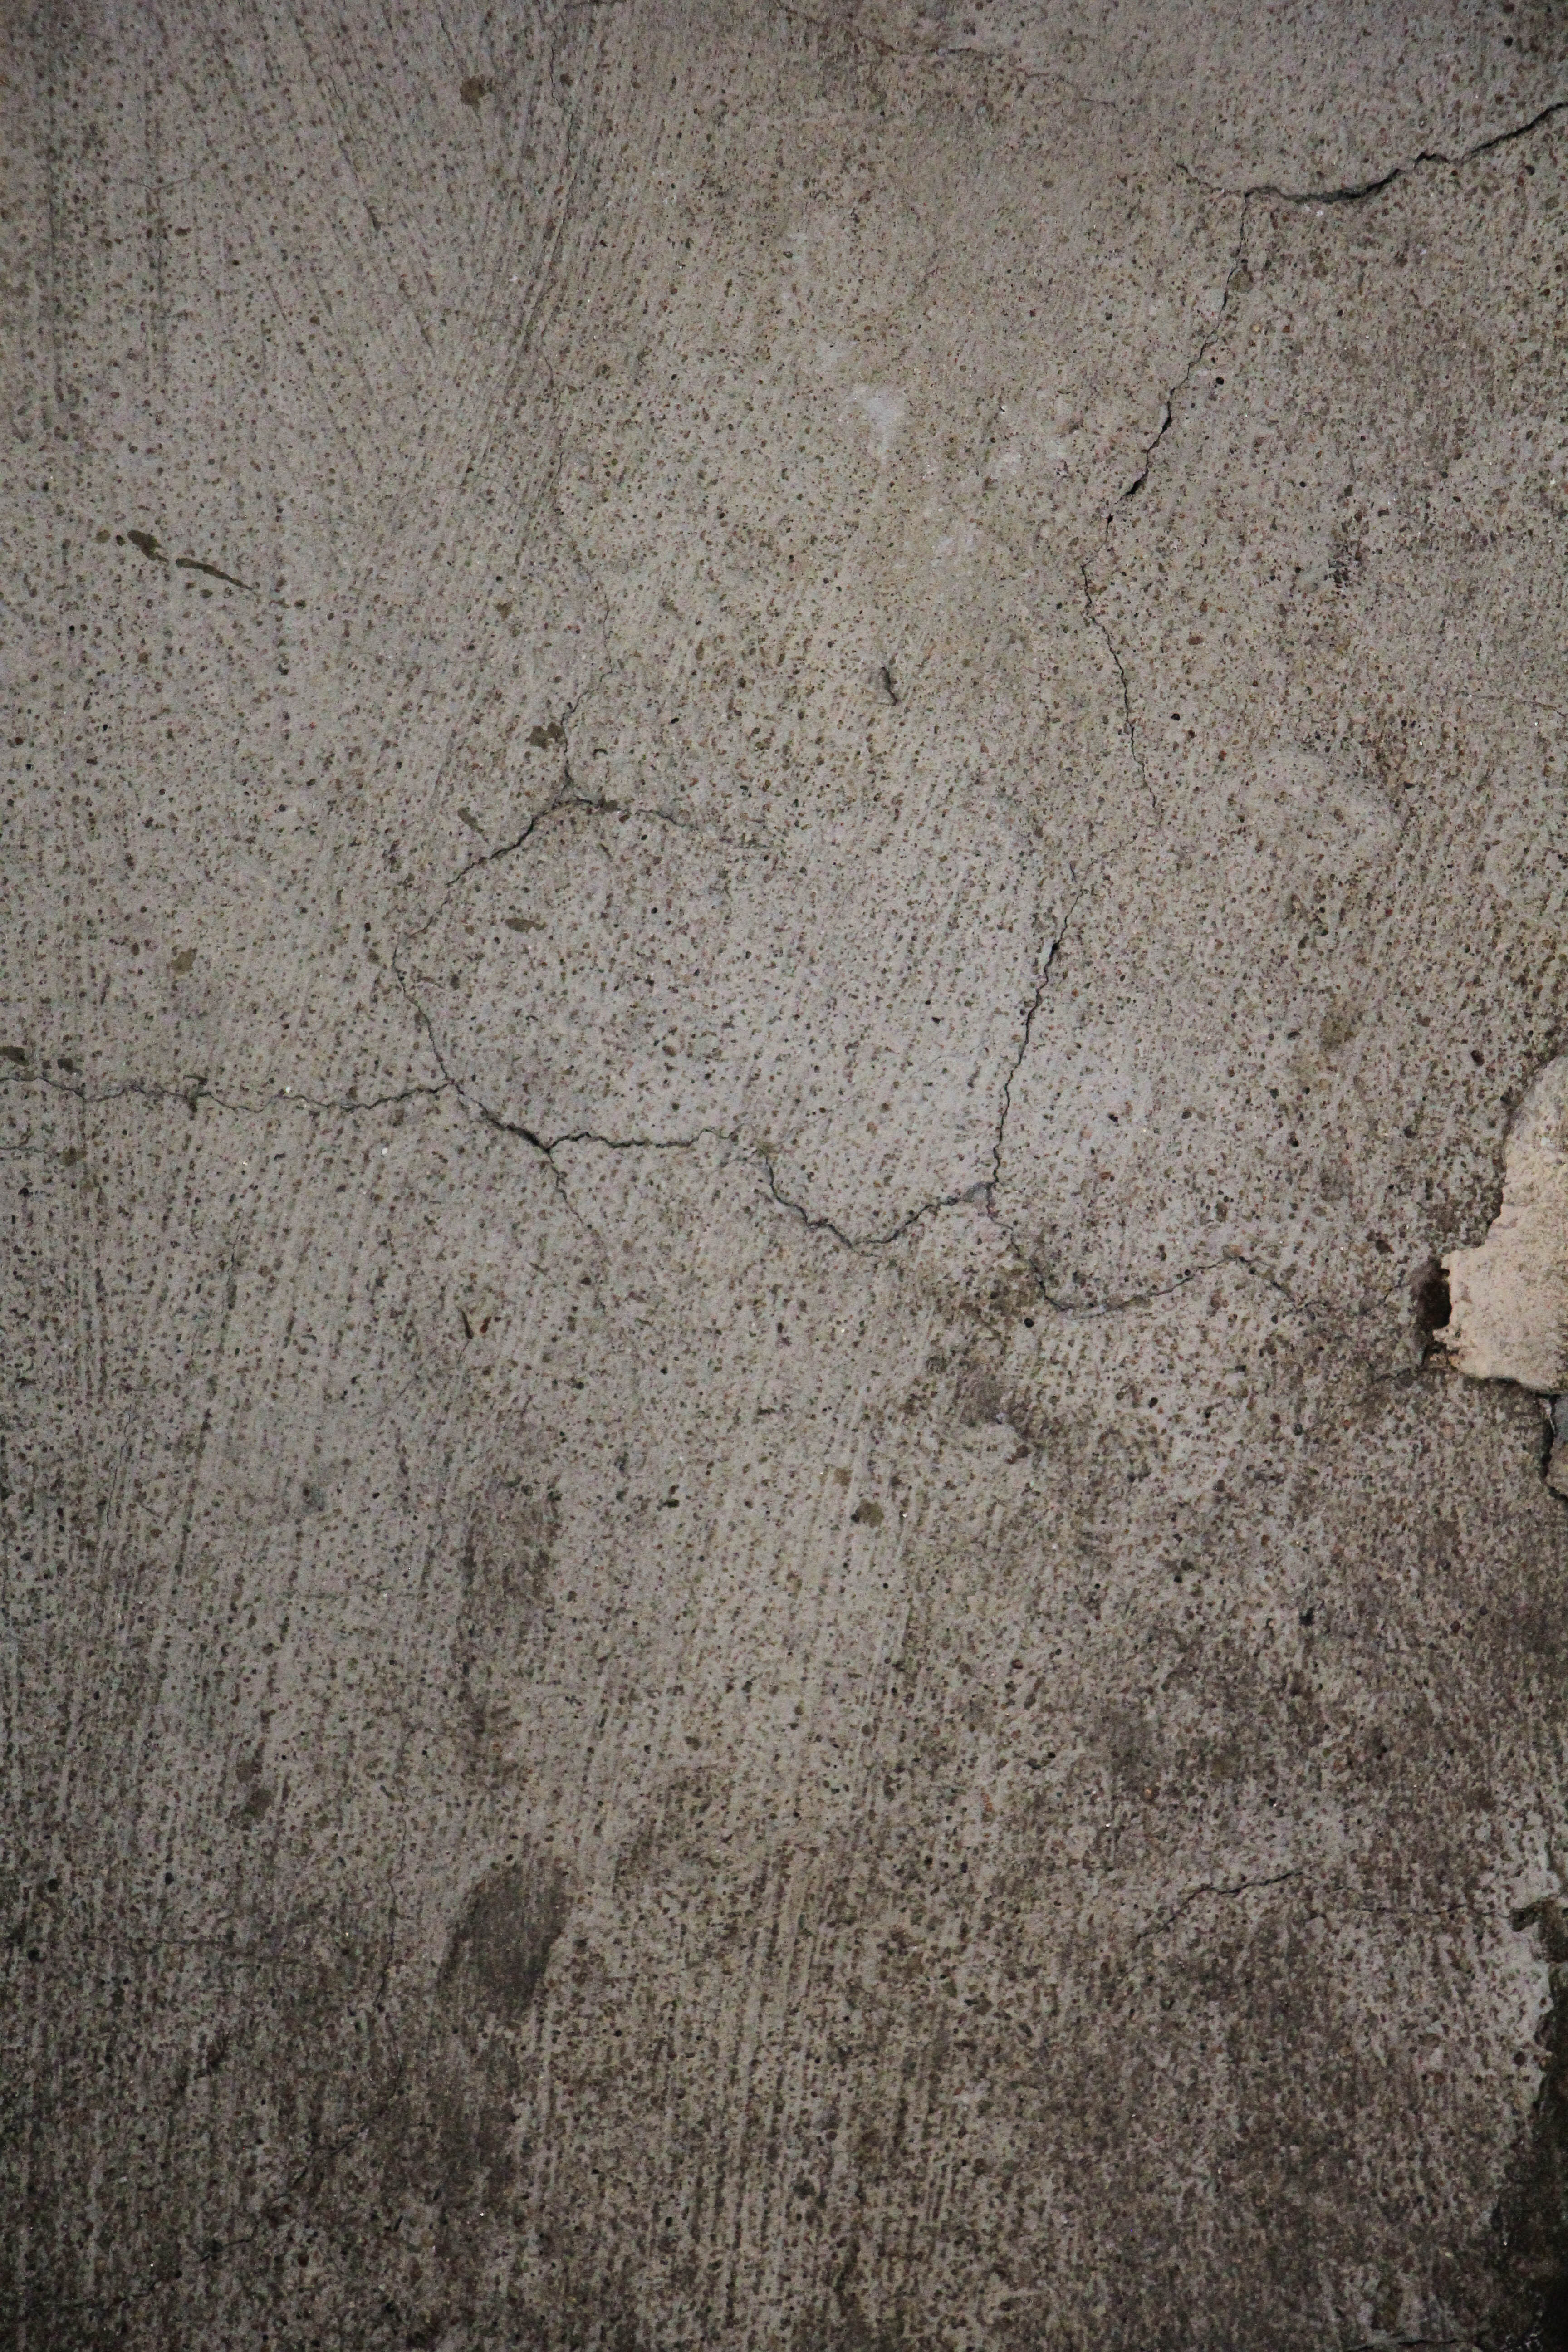 grunge texture cracked concrete old dirty stock photo - TextureX ...